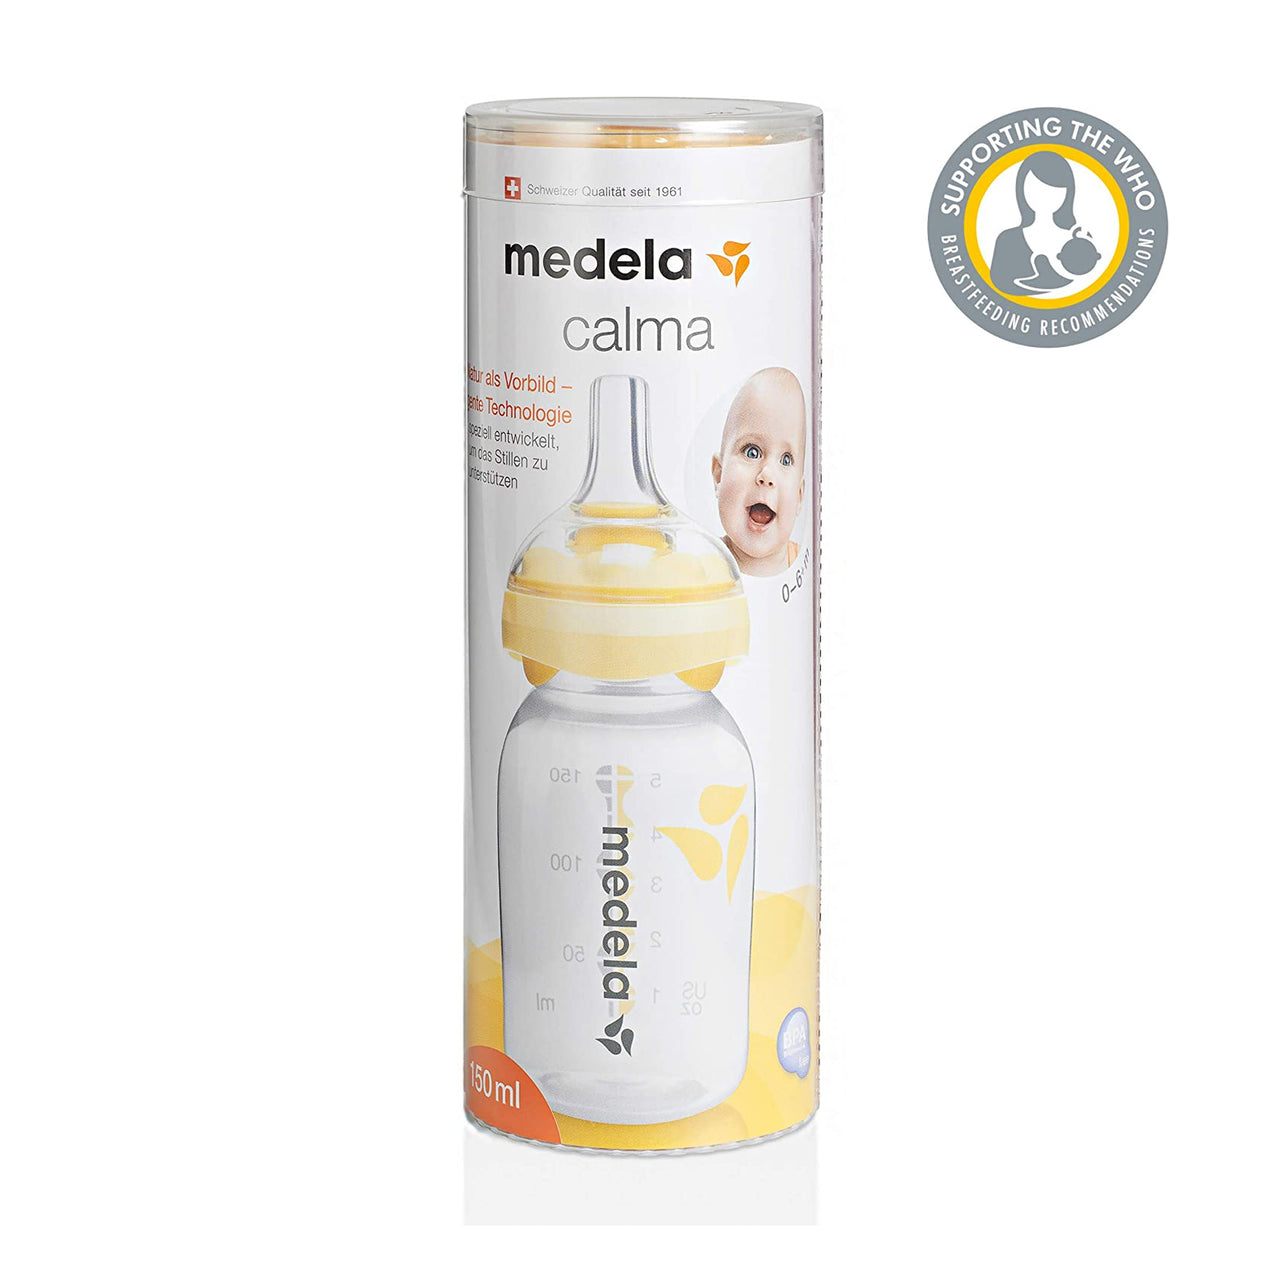  Medela Calma Bottle Nipple, Baby Bottle Teat for use with  Medela collection bottles, Made without BPA